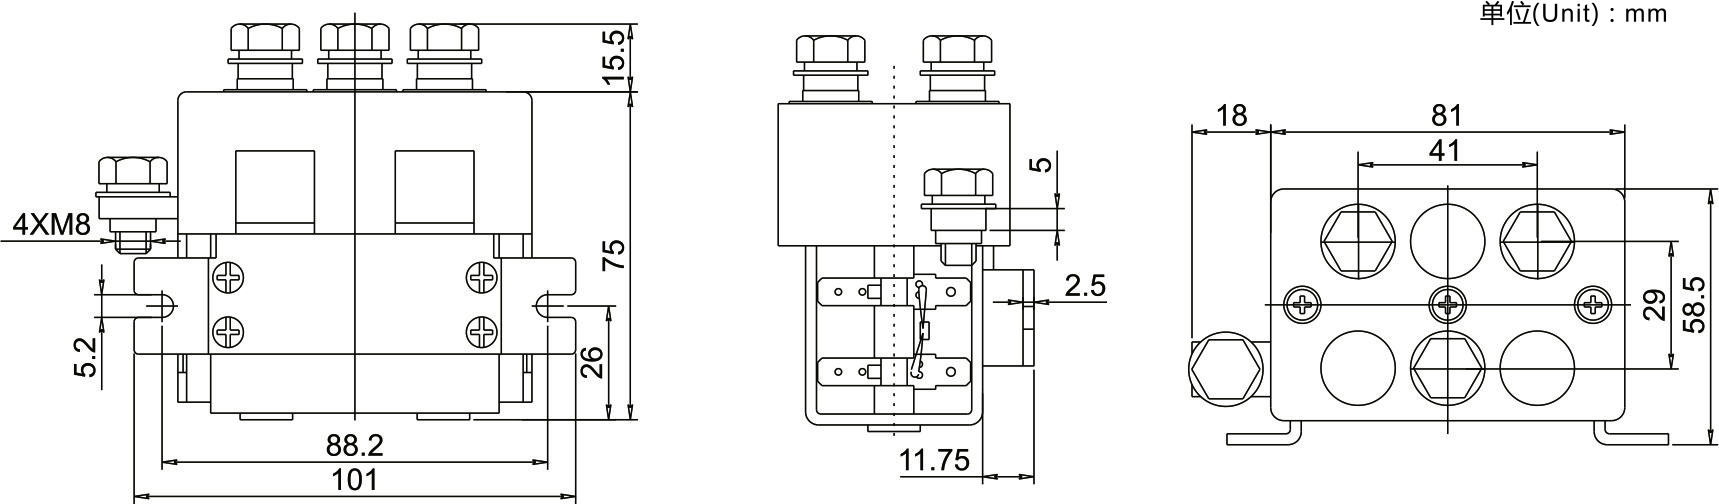 ADC125A直流换向接触器,用于电源控制系统